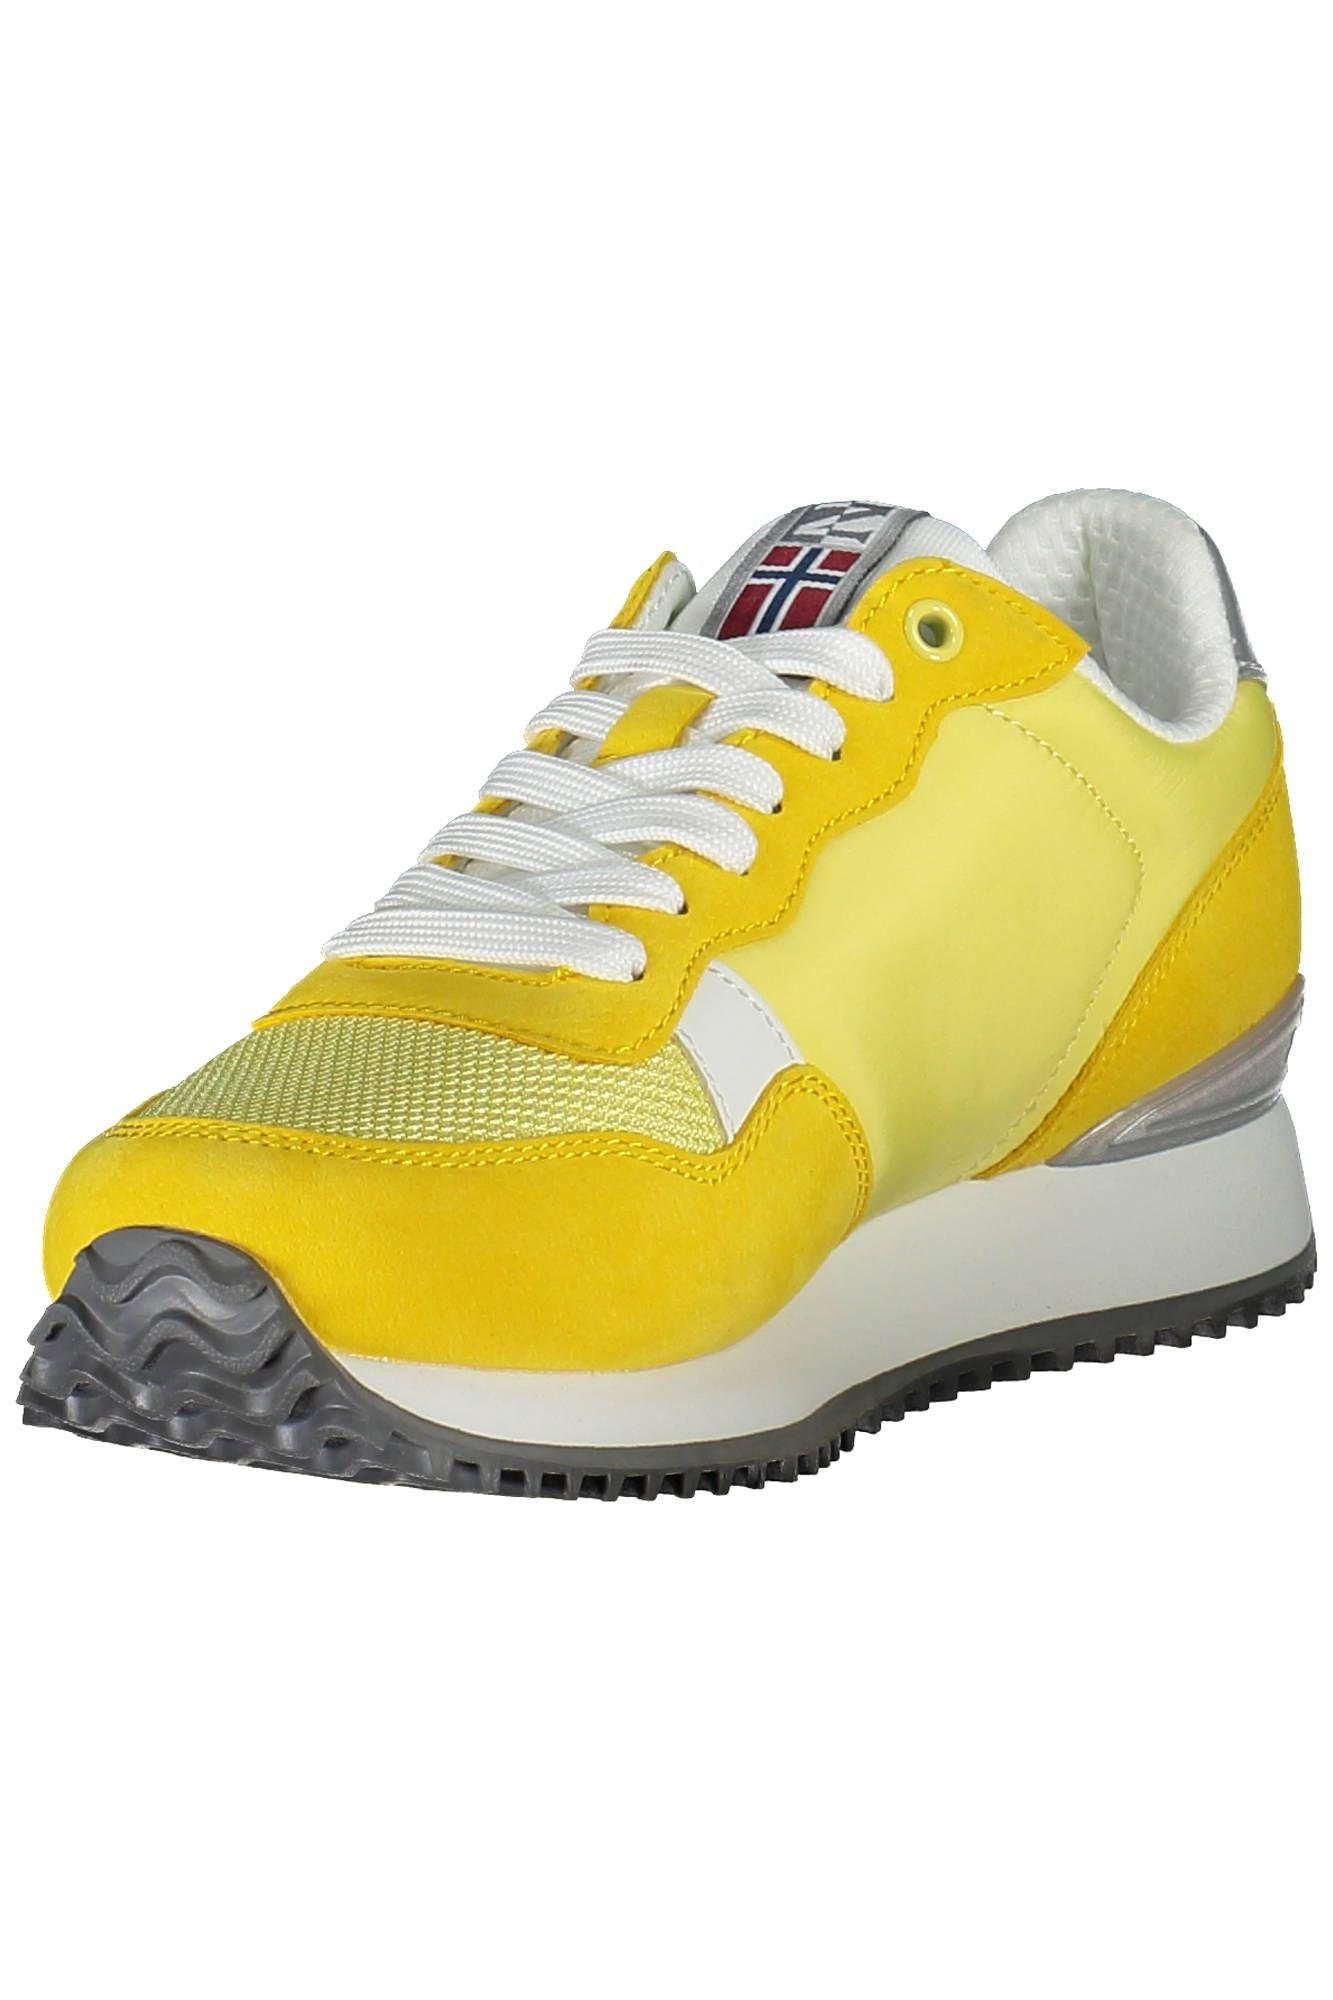 Napapijri Vibrant Yellow Lace-up Sneakers - PER.FASHION